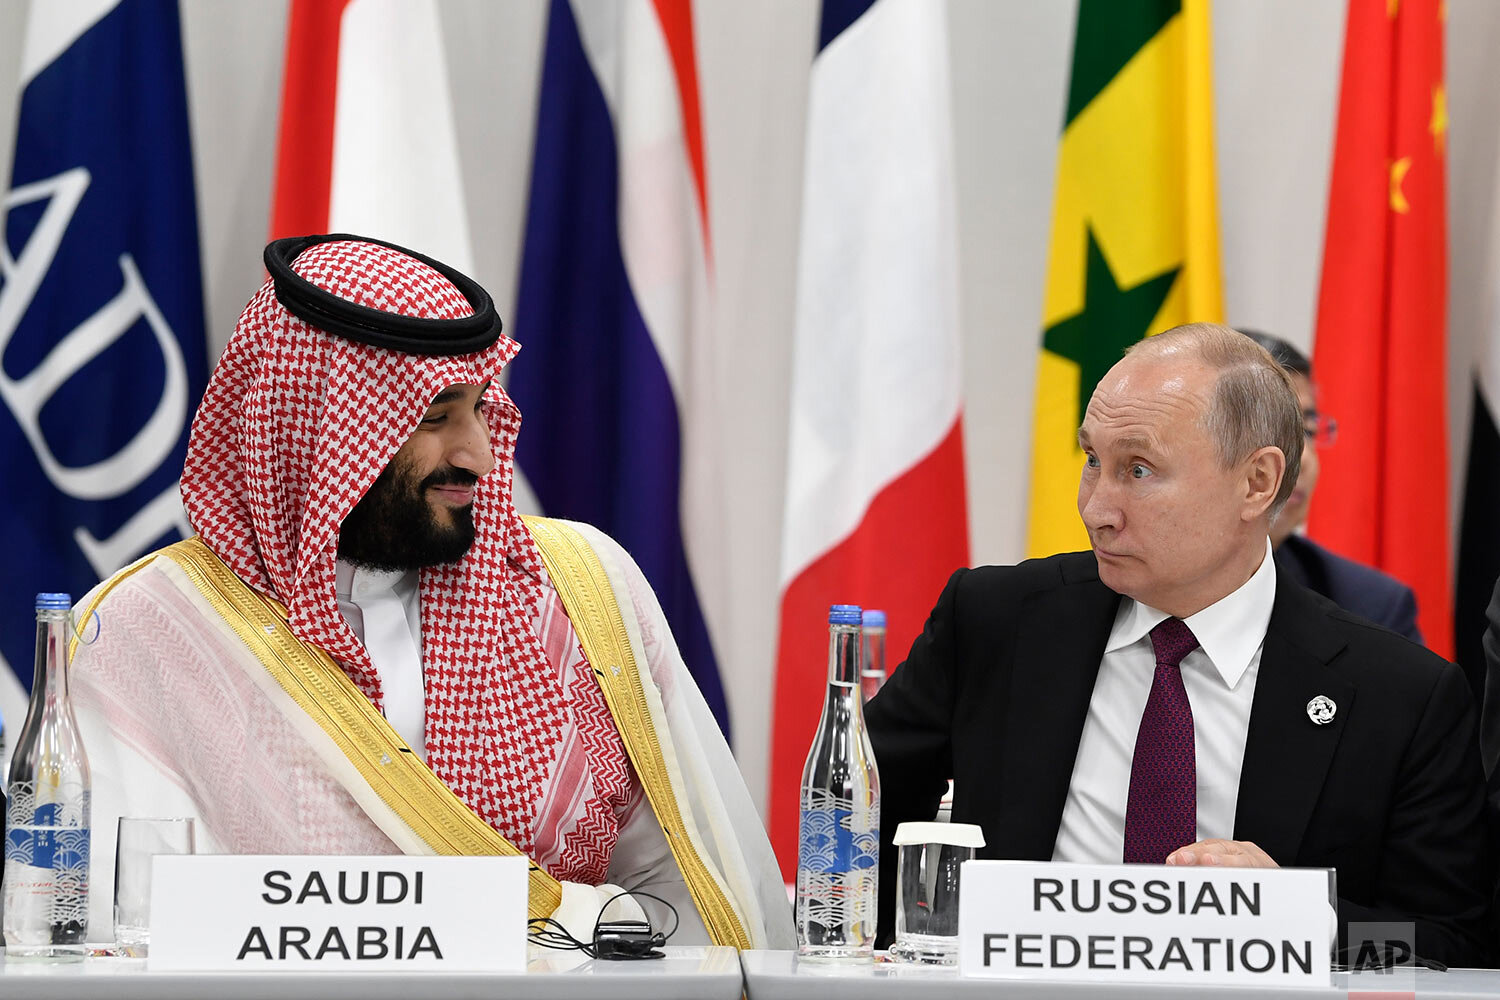  Saudi Arabia's Crown Prince Mohammed bin Salman, left, talks with Russian President Vladimir Putin, right, during the G-20 summit event on the Digital Economy in Osaka, Japan, Friday, June 28, 2019. (AP Photo/Susan Walsh) 